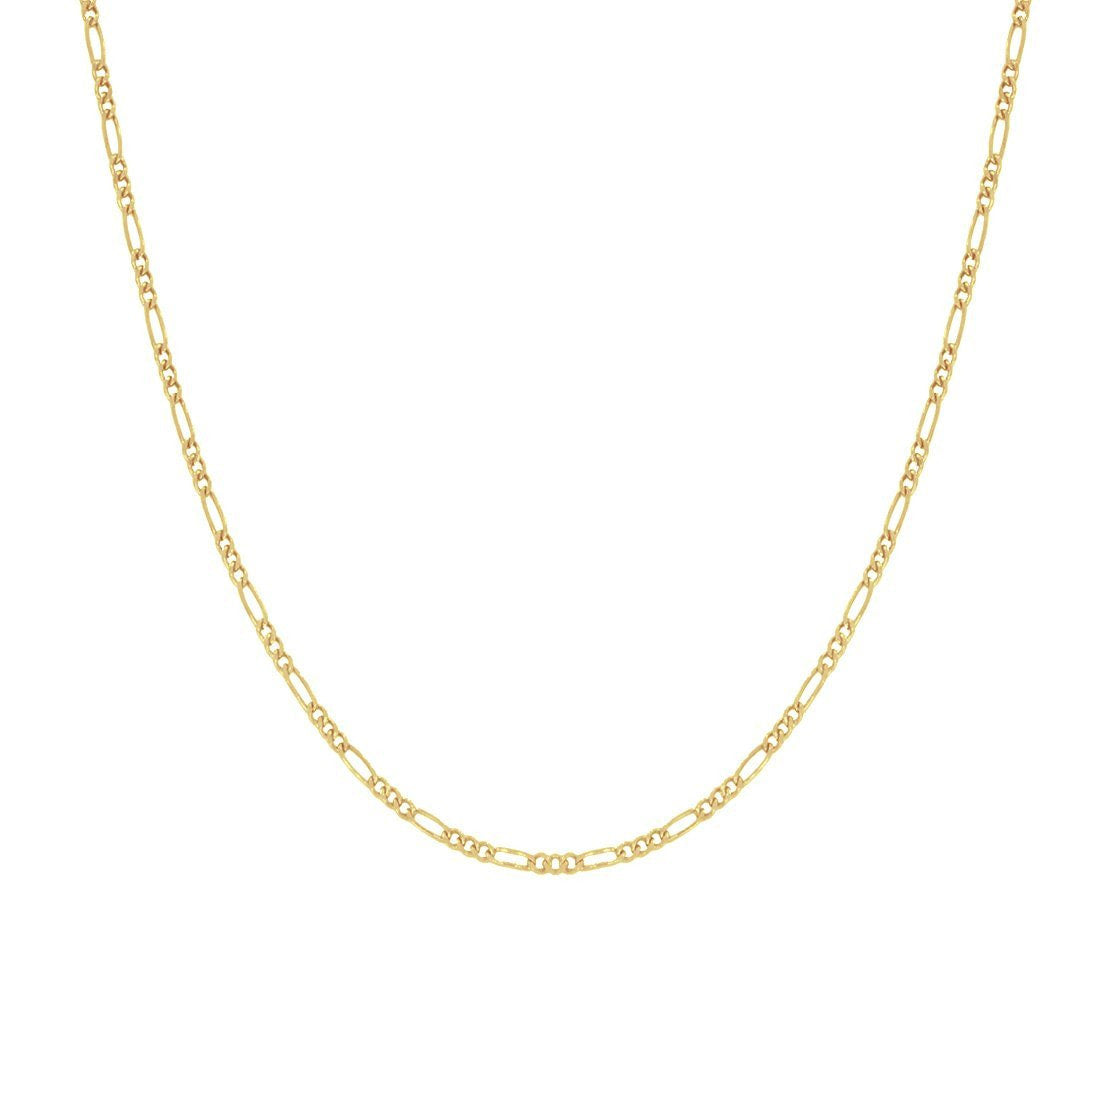 Cadena Oro 14k Cartier Diamantada 40 cm, Ancho 1.6 mm - Infiniti Joyas